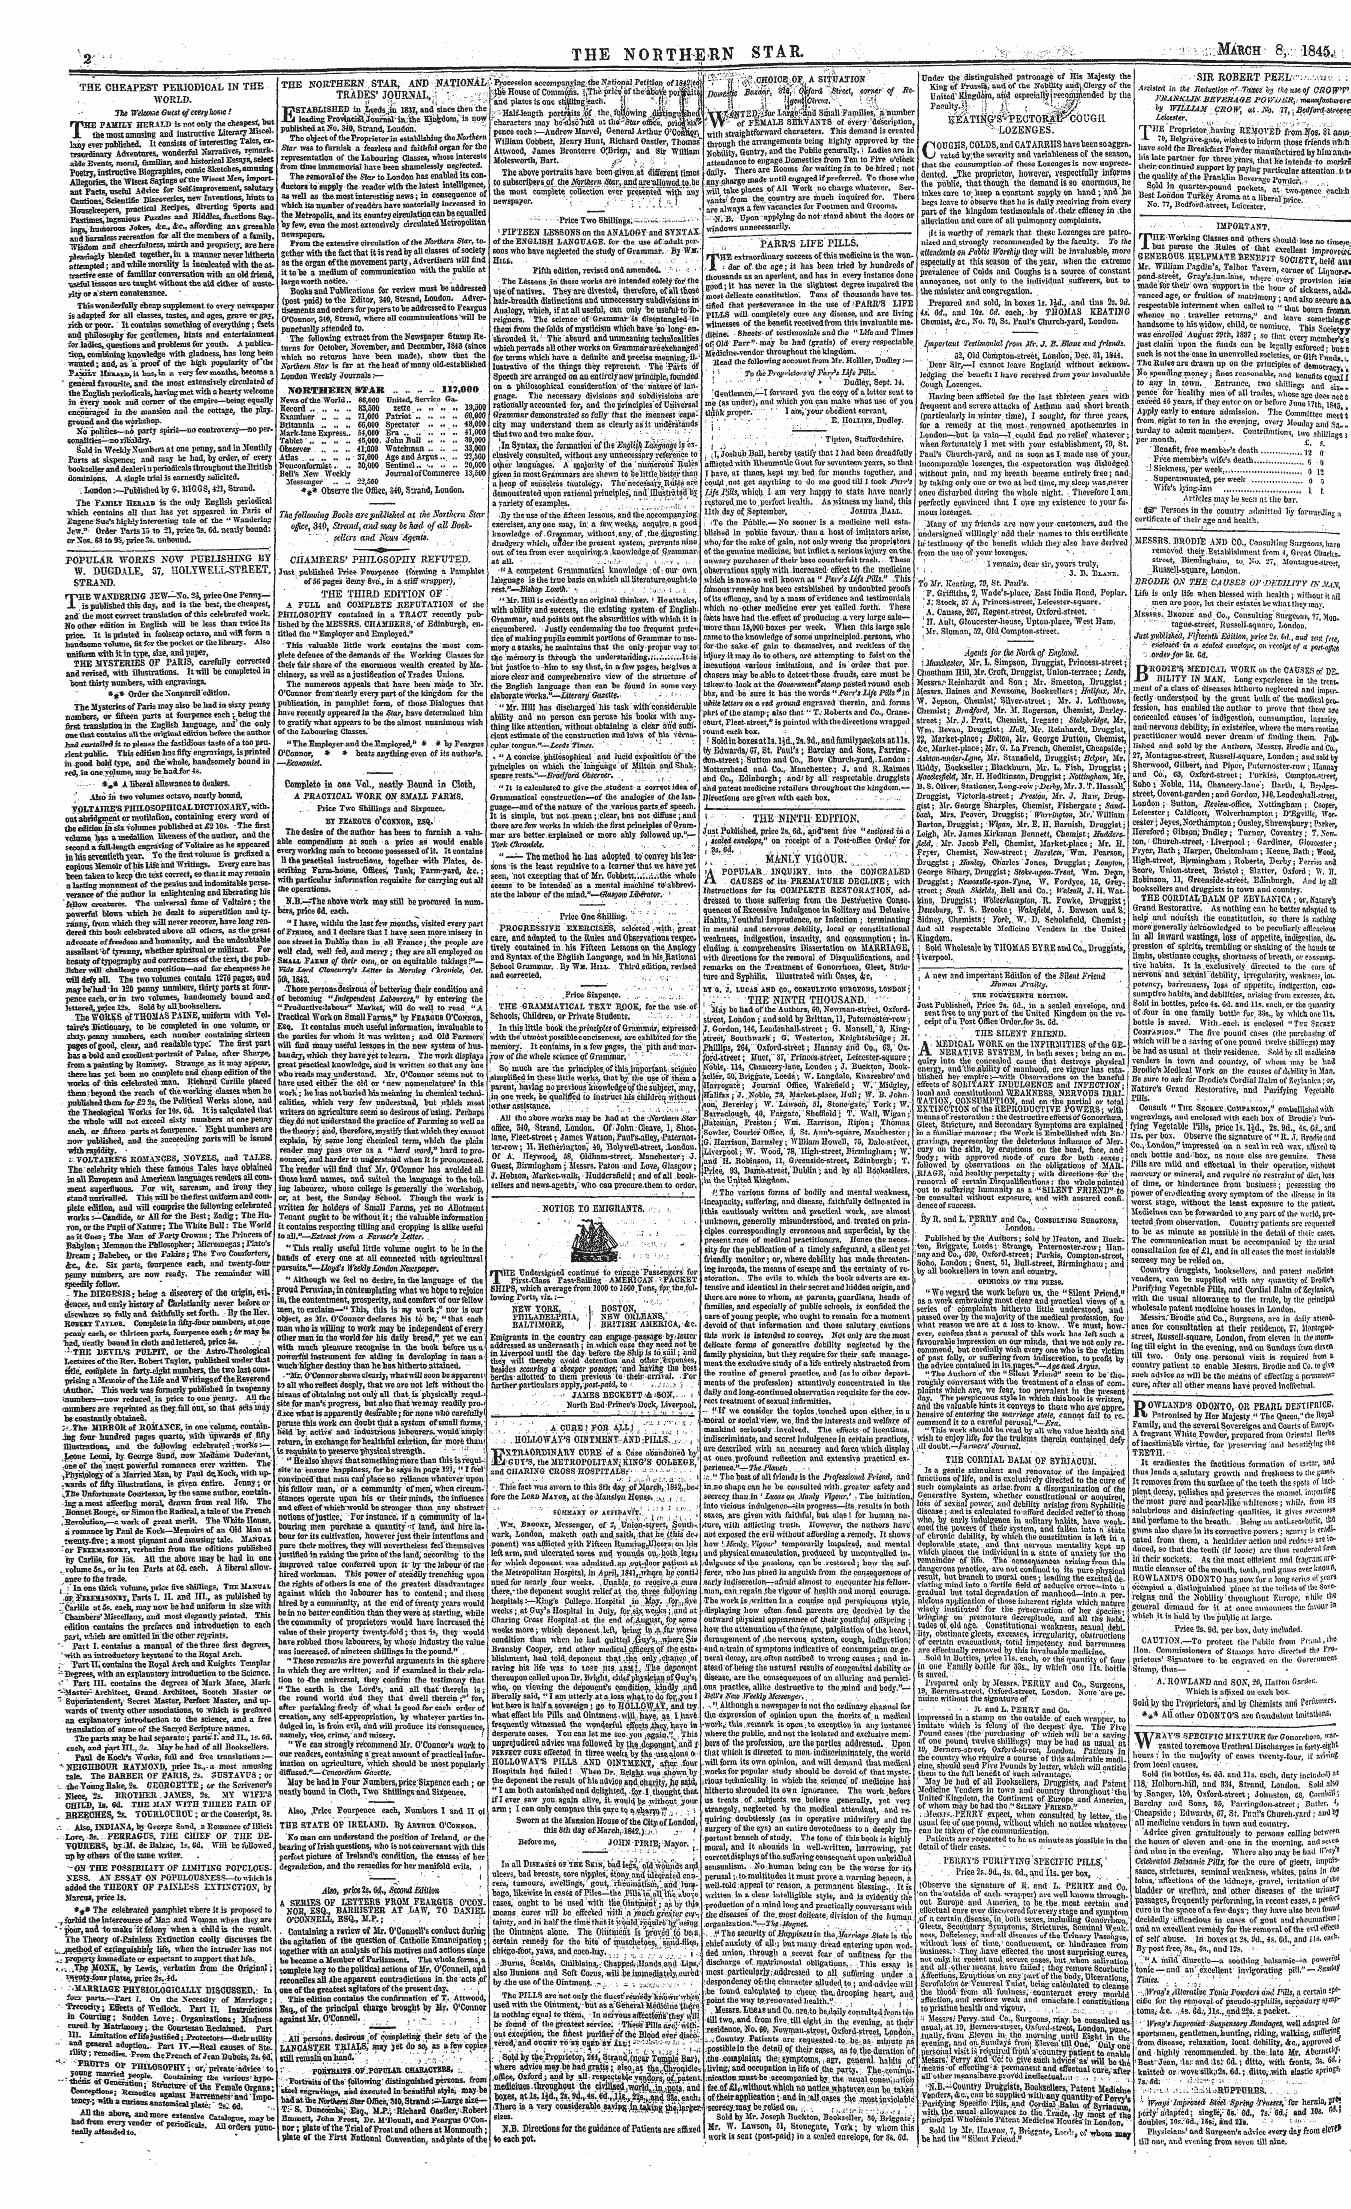 Northern Star (1837-1852): jS F Y, 3rd edition - Ad00217